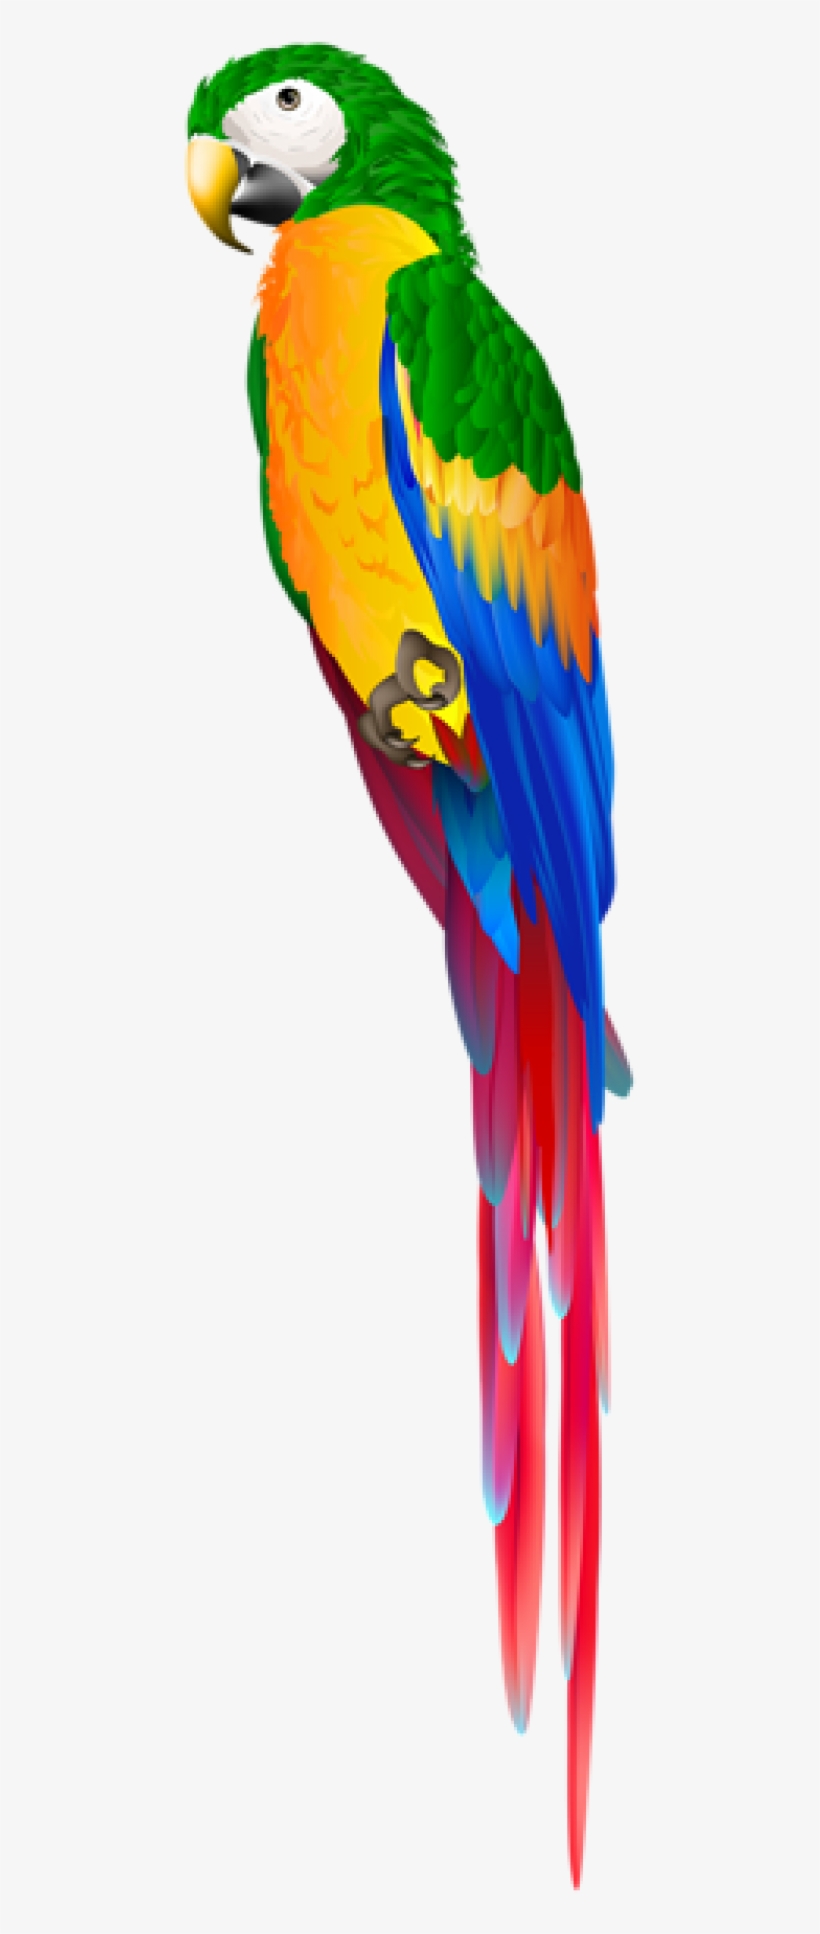 Free Png Download Parrot Green Png Images Background - Transparent Clipart Parrot, transparent png #7742632